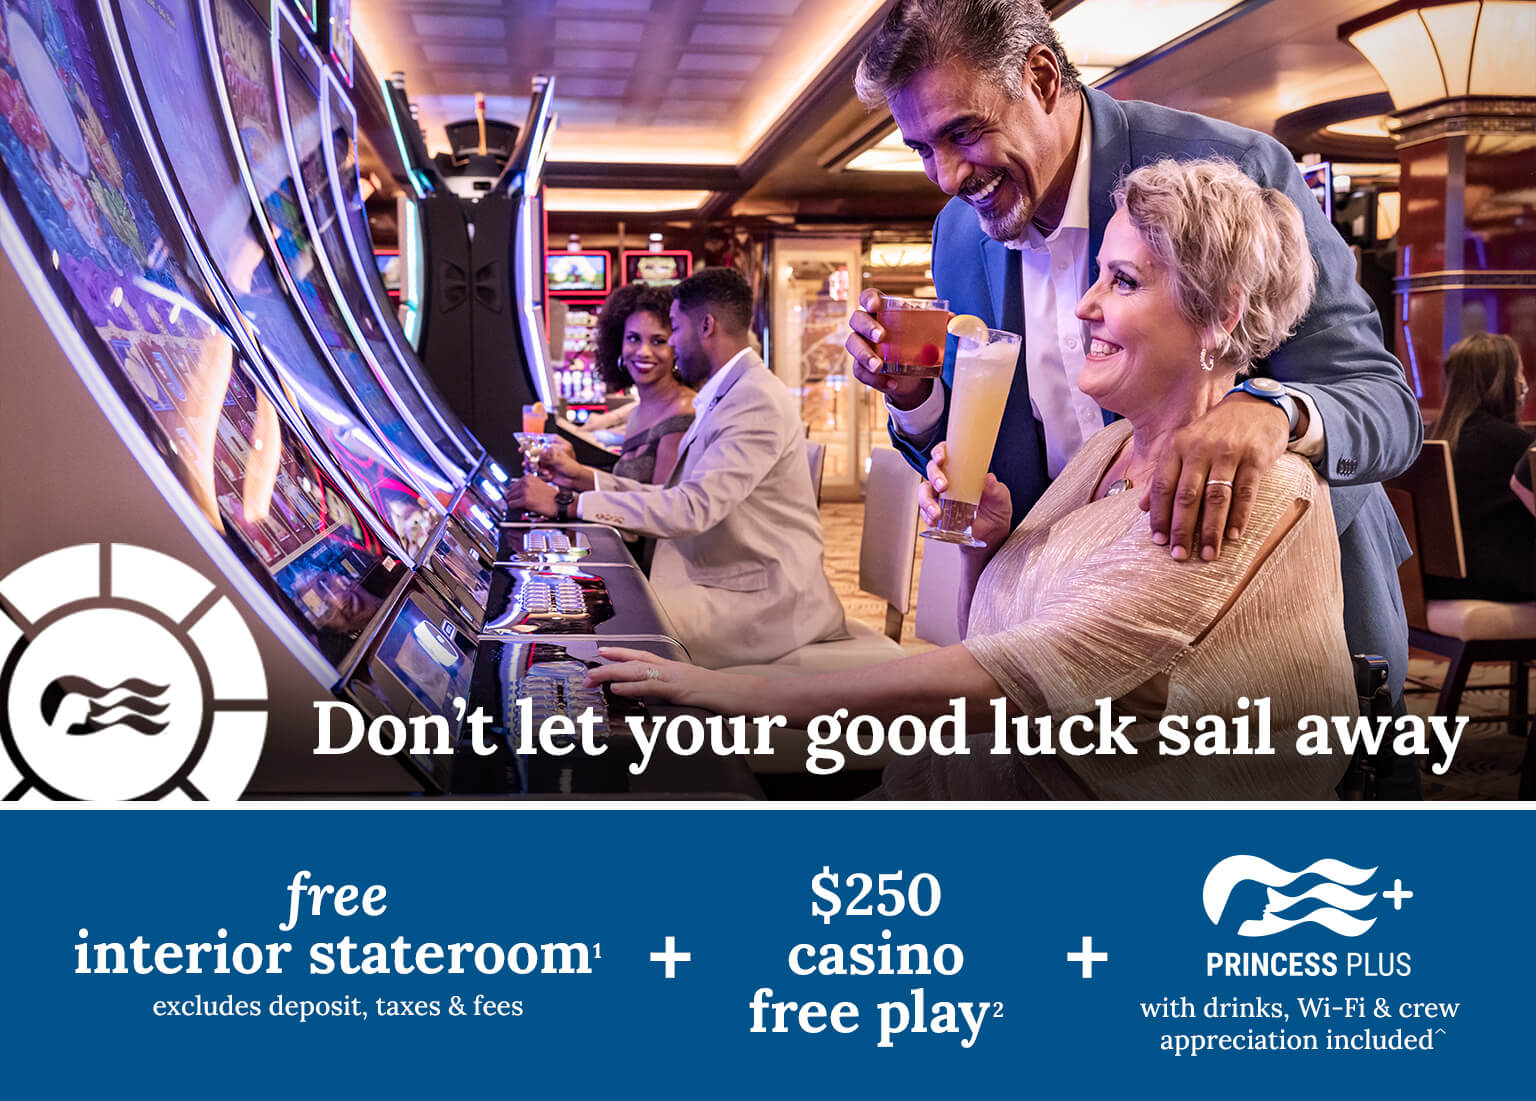 free interior stateroom + $250 casino free play + Princess Plus. Click here to book.